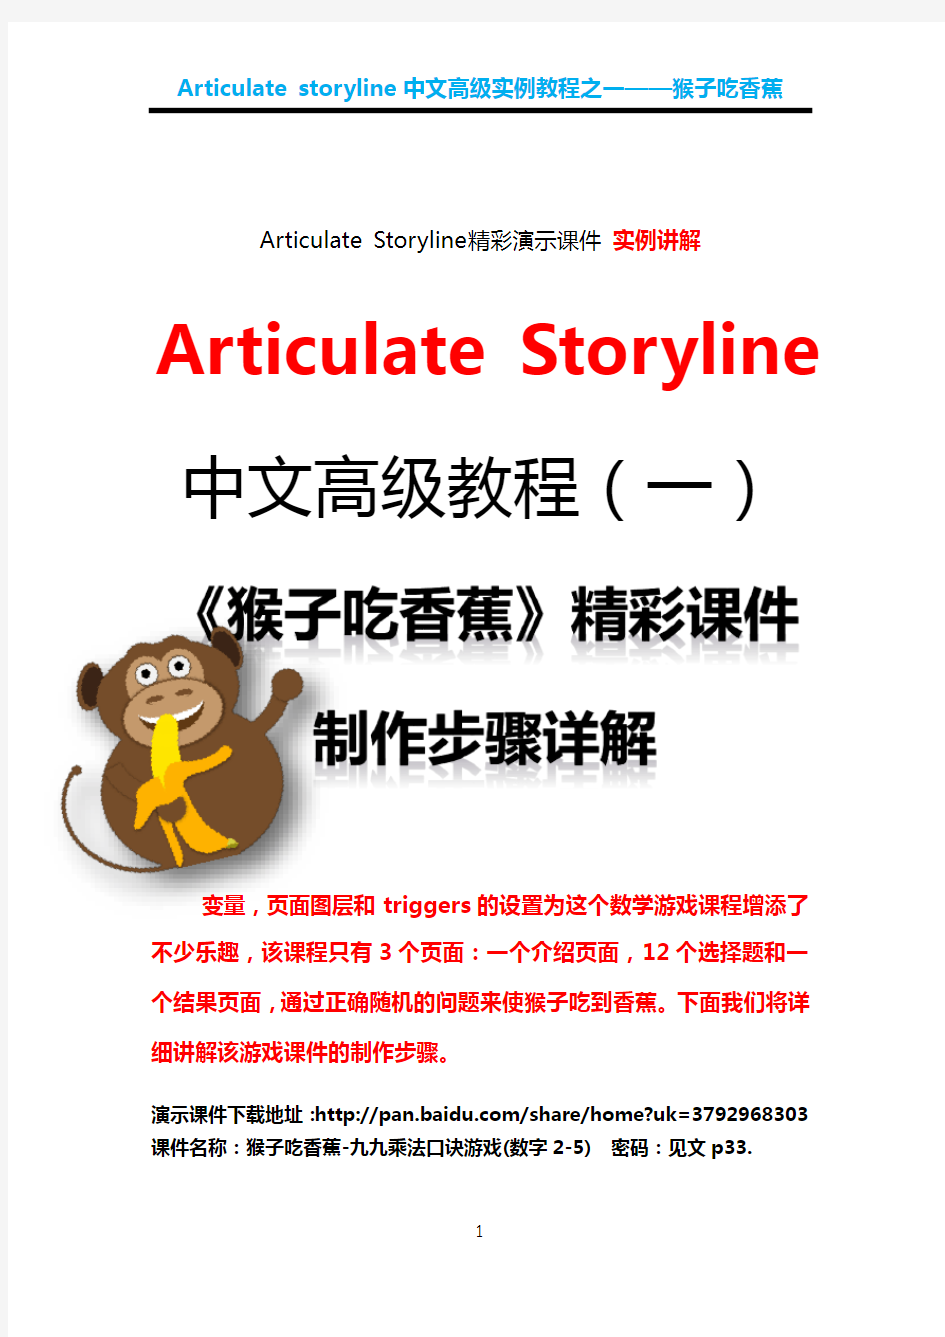 Articulate Storyline中文高级实例教程之一 《猴子吃香蕉》精彩案例详解